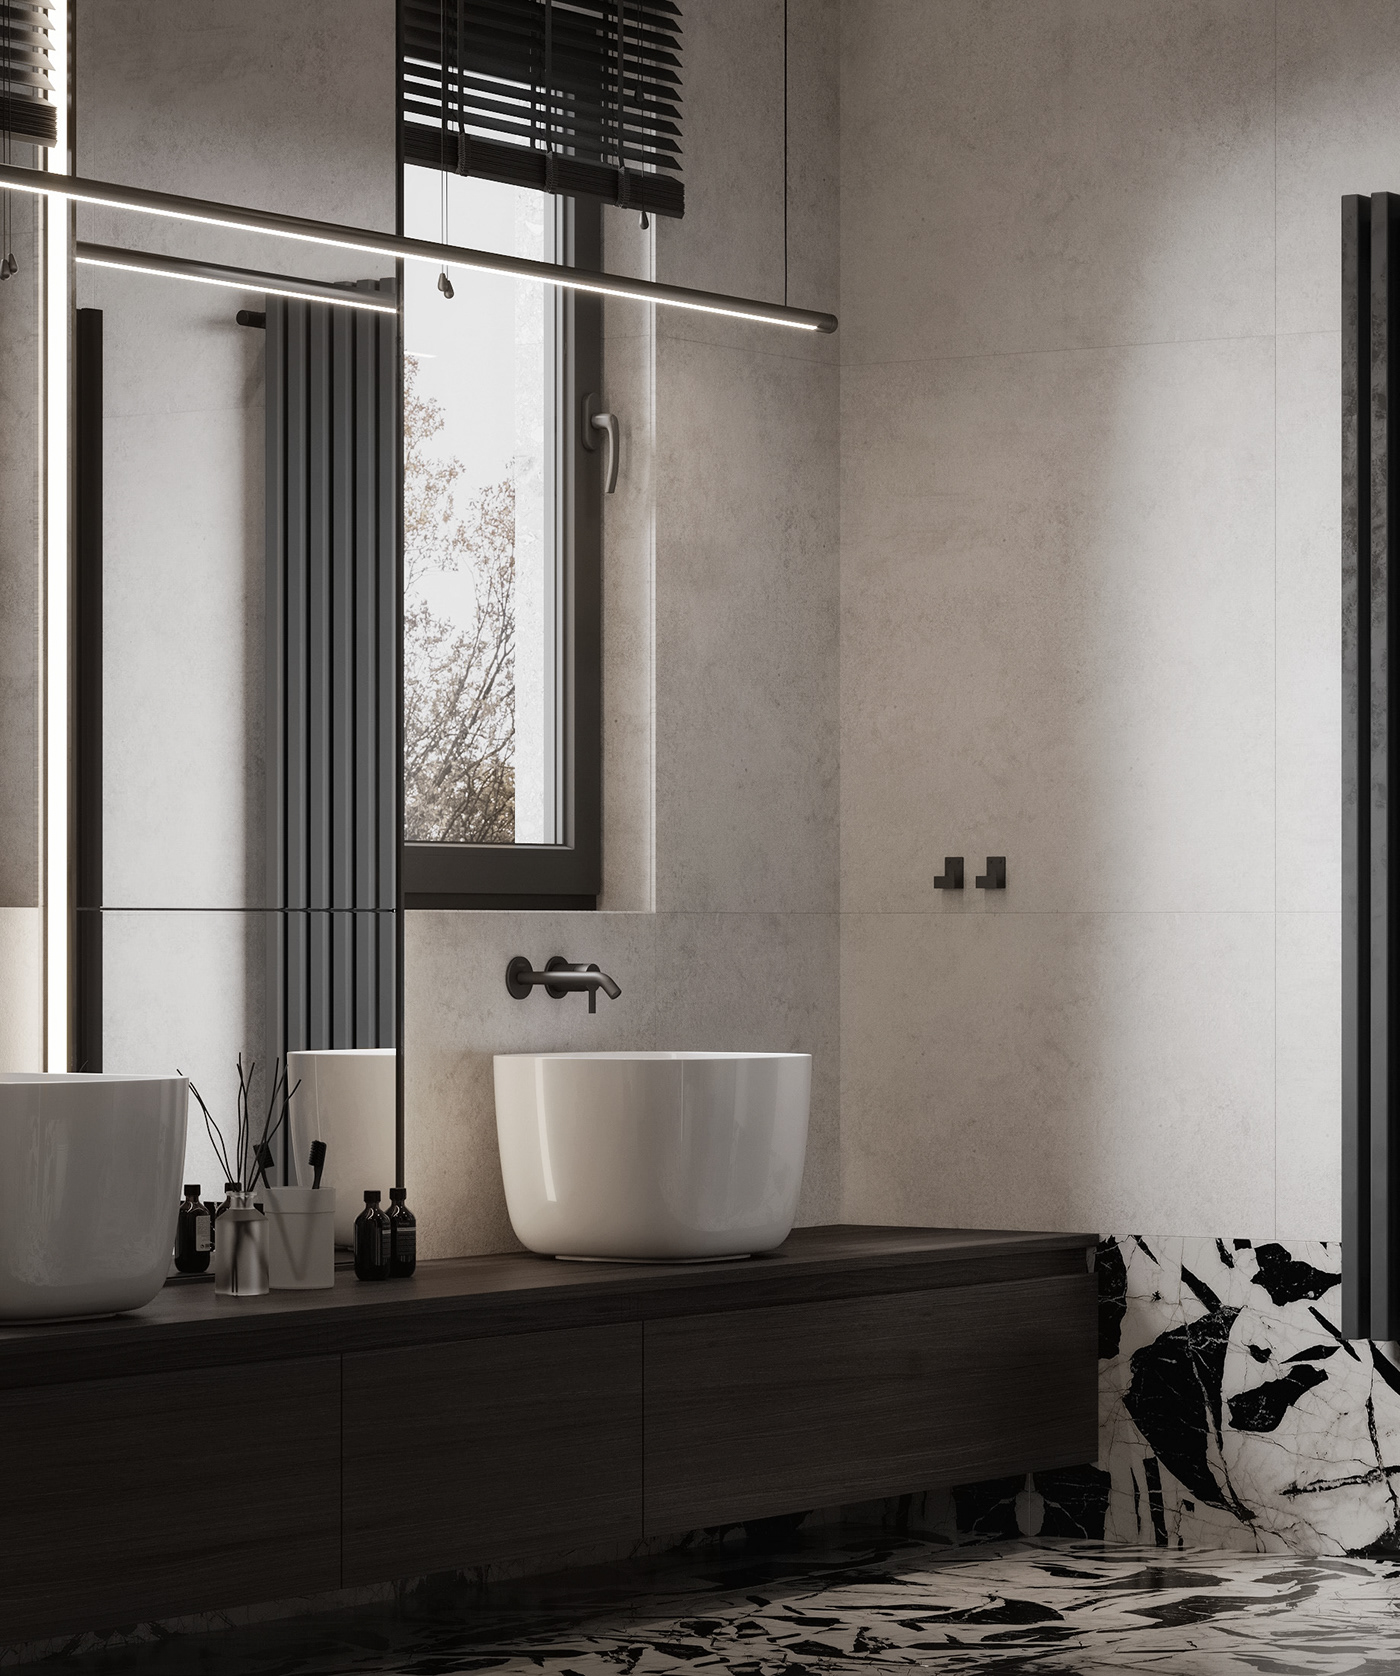 bathroom bathroom design design interior Minimalism minimalist interior modern